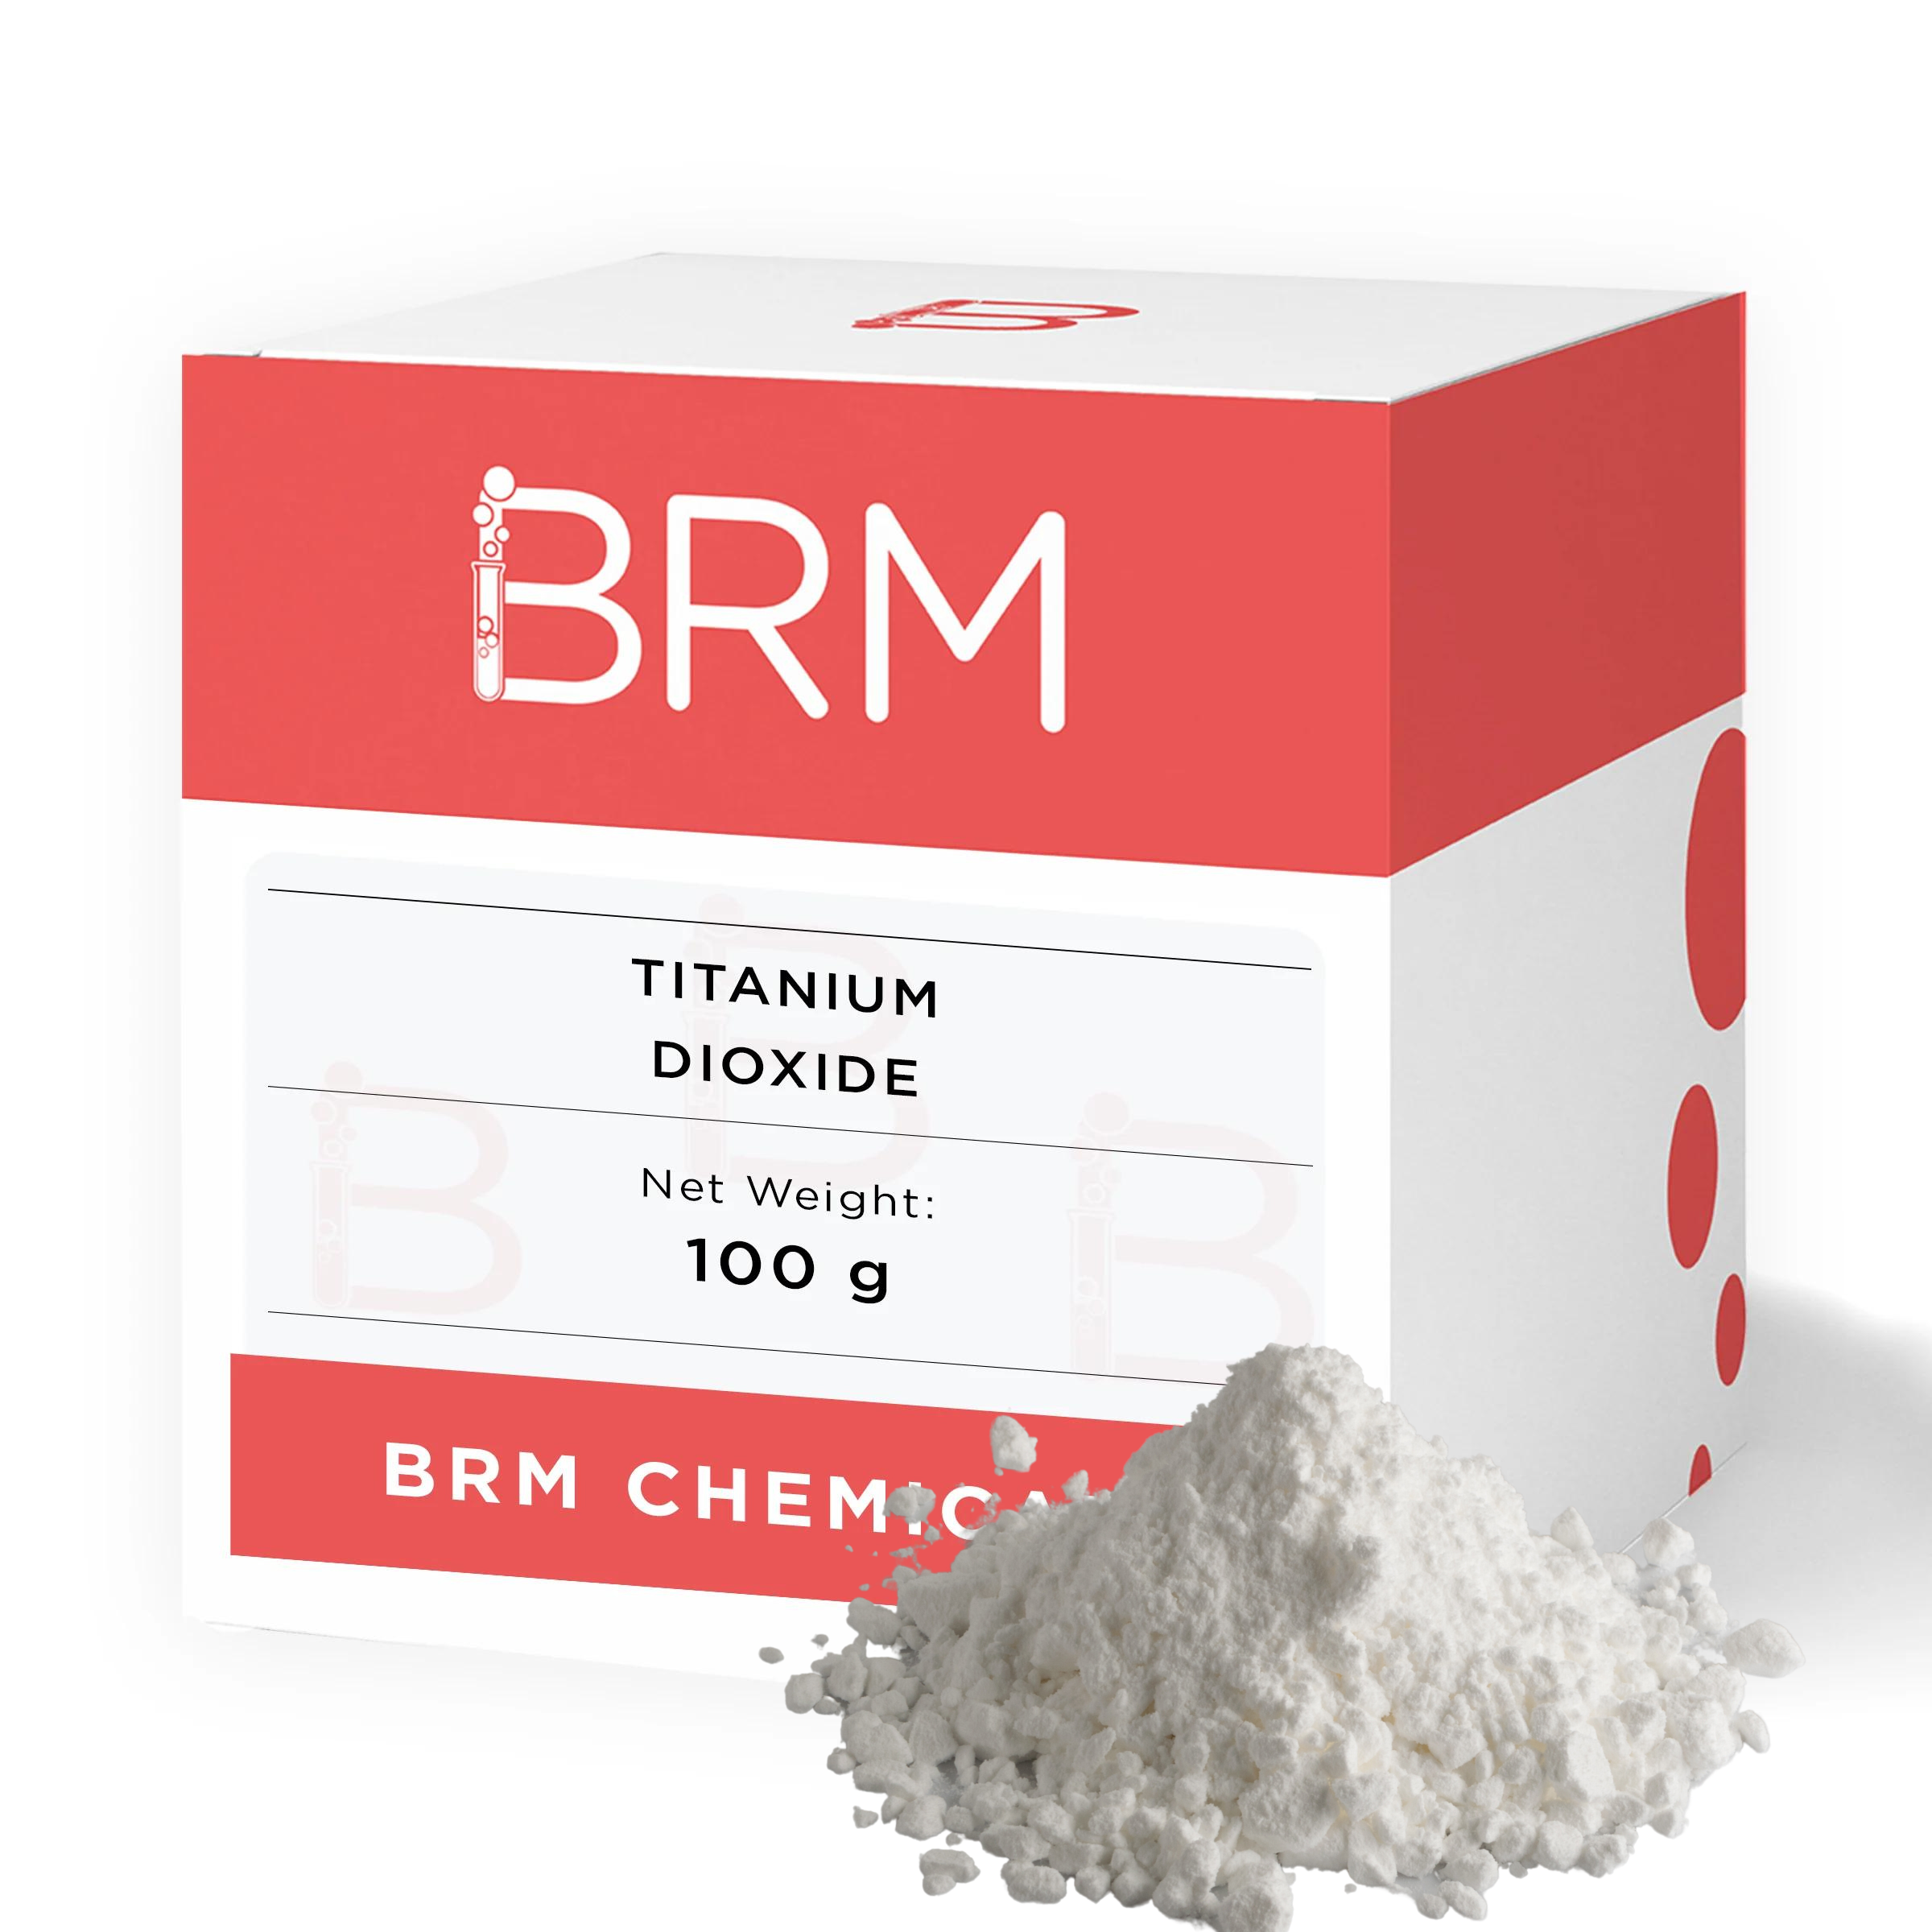 BRM Chemicals Titanium Dioxide Powder for Soap Making, Shampoo